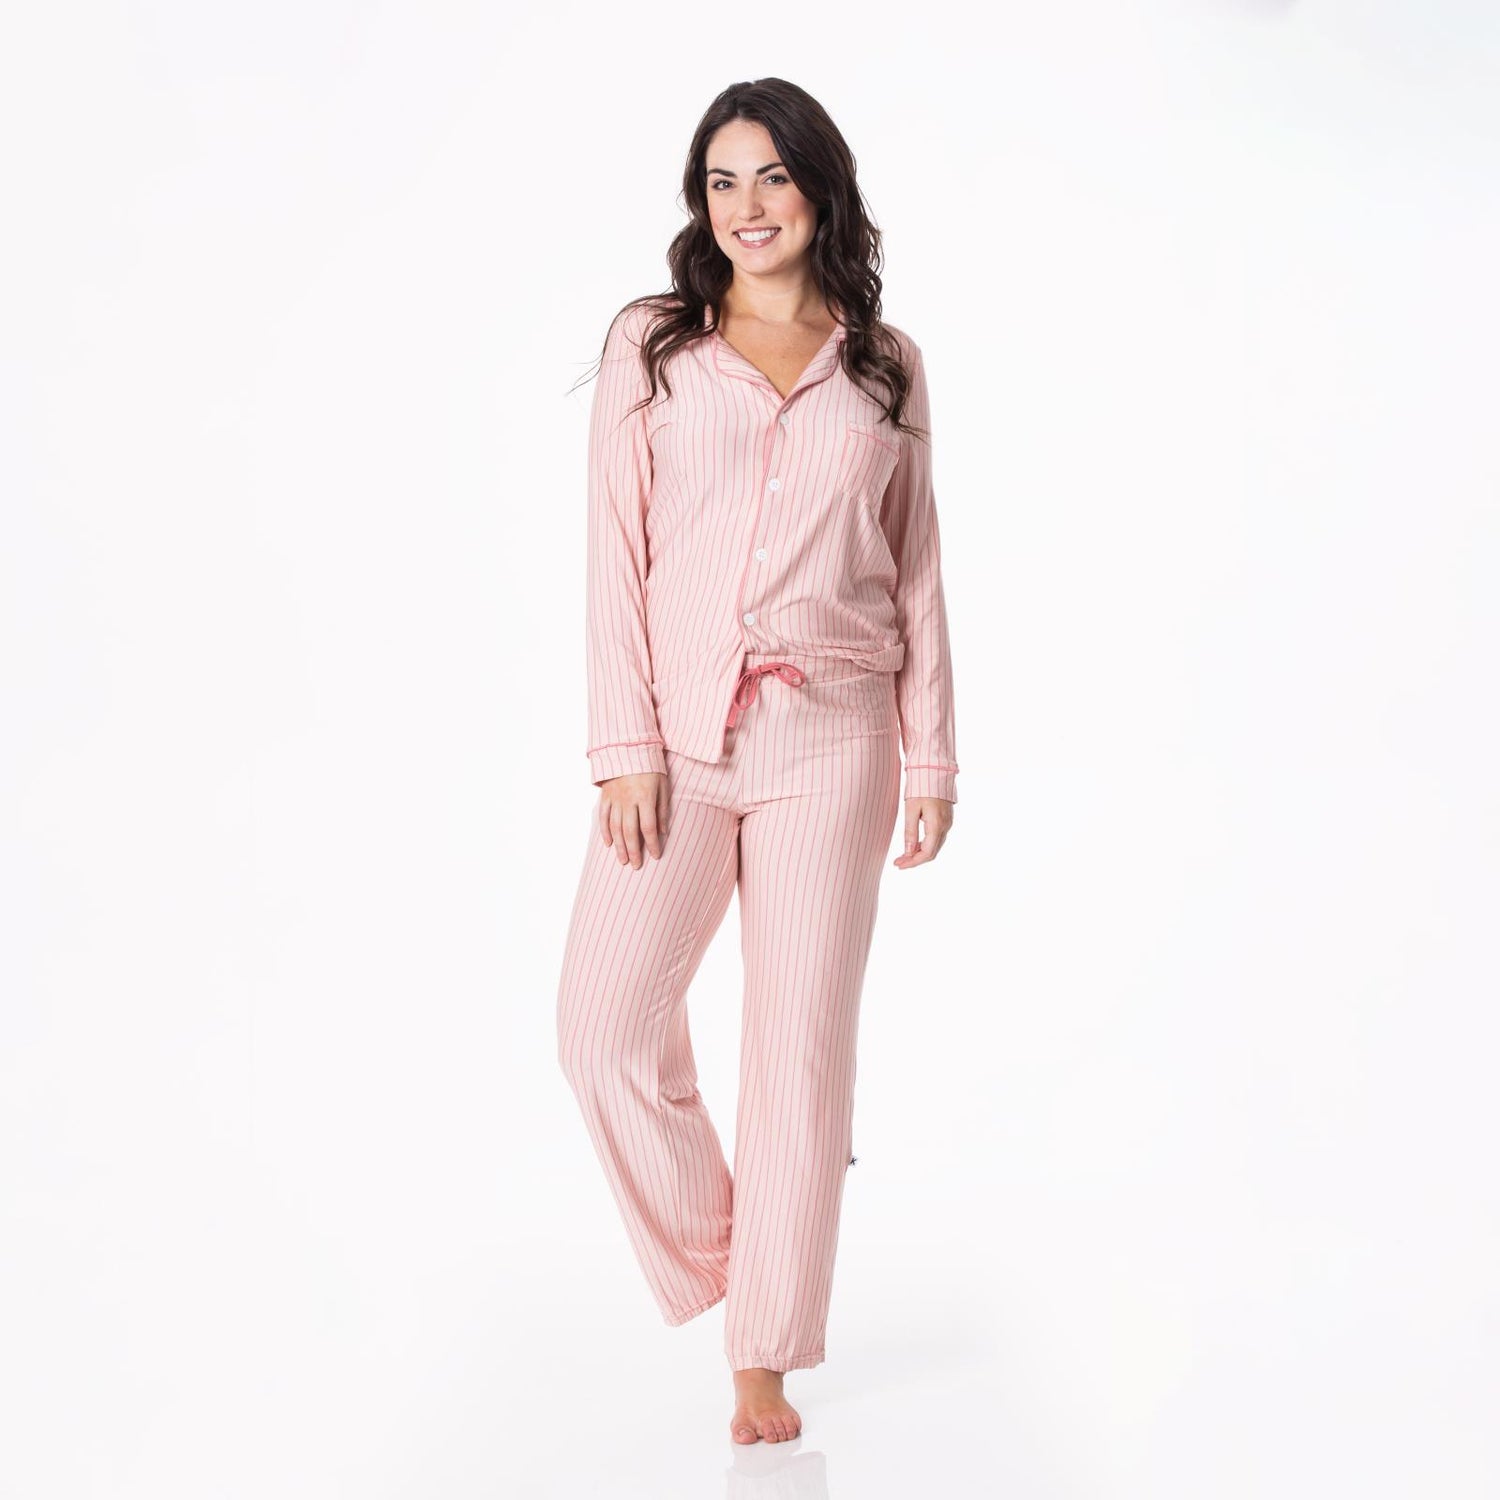 Women's Print Long Sleeve Collared Pajama Set in Pinstripe